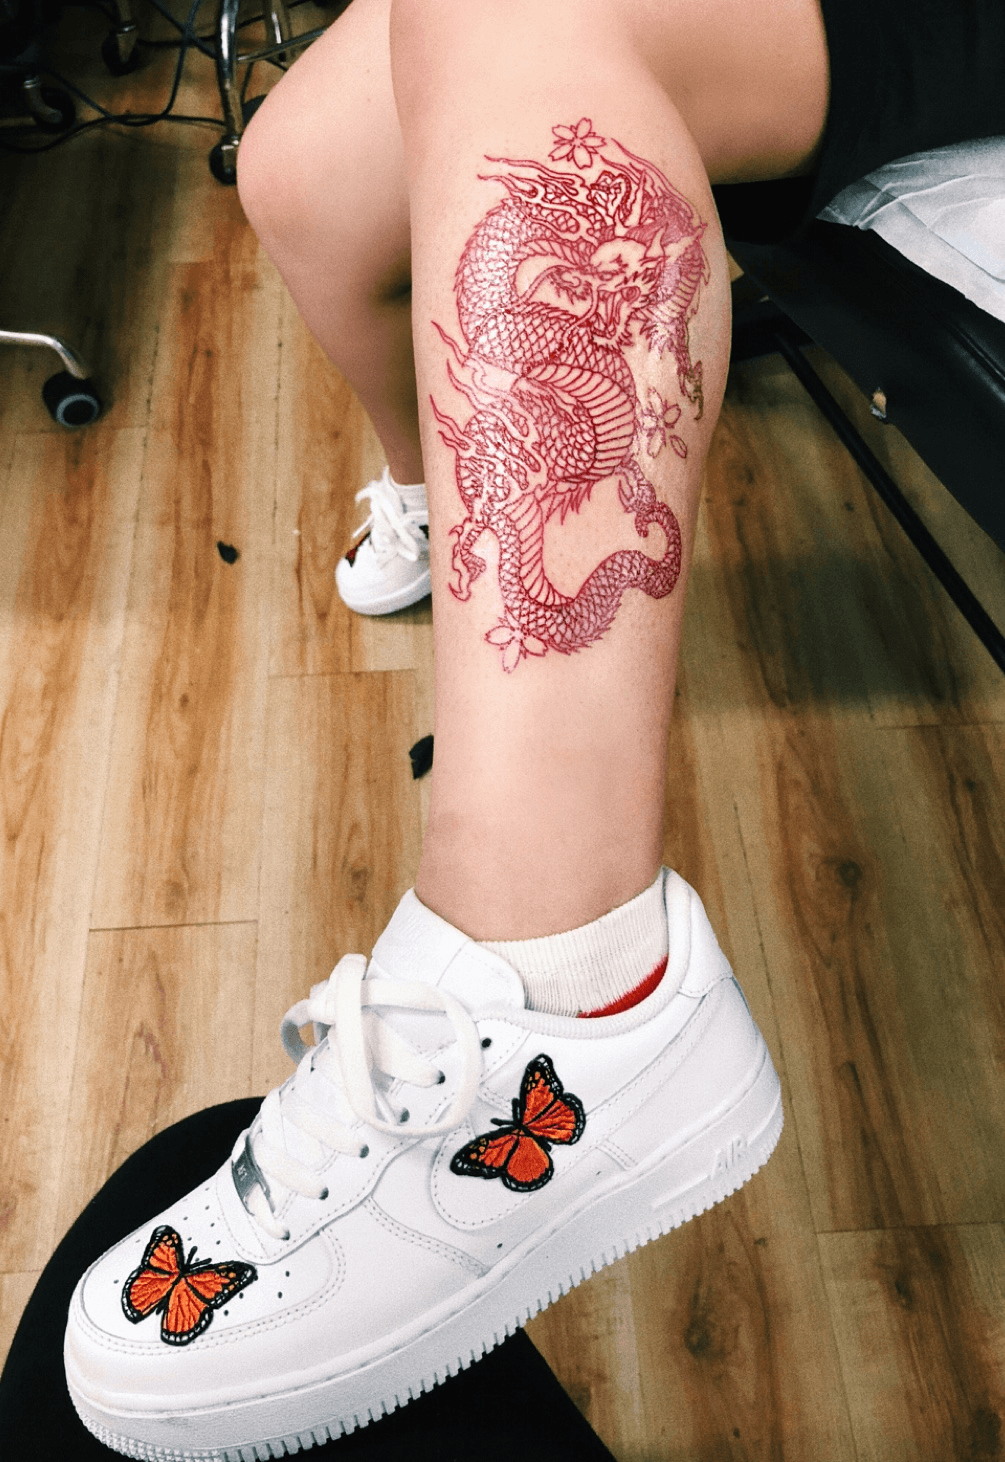 Tiger Dragon Cherry Blossom Tattoo by robinsfantasy on DeviantArt